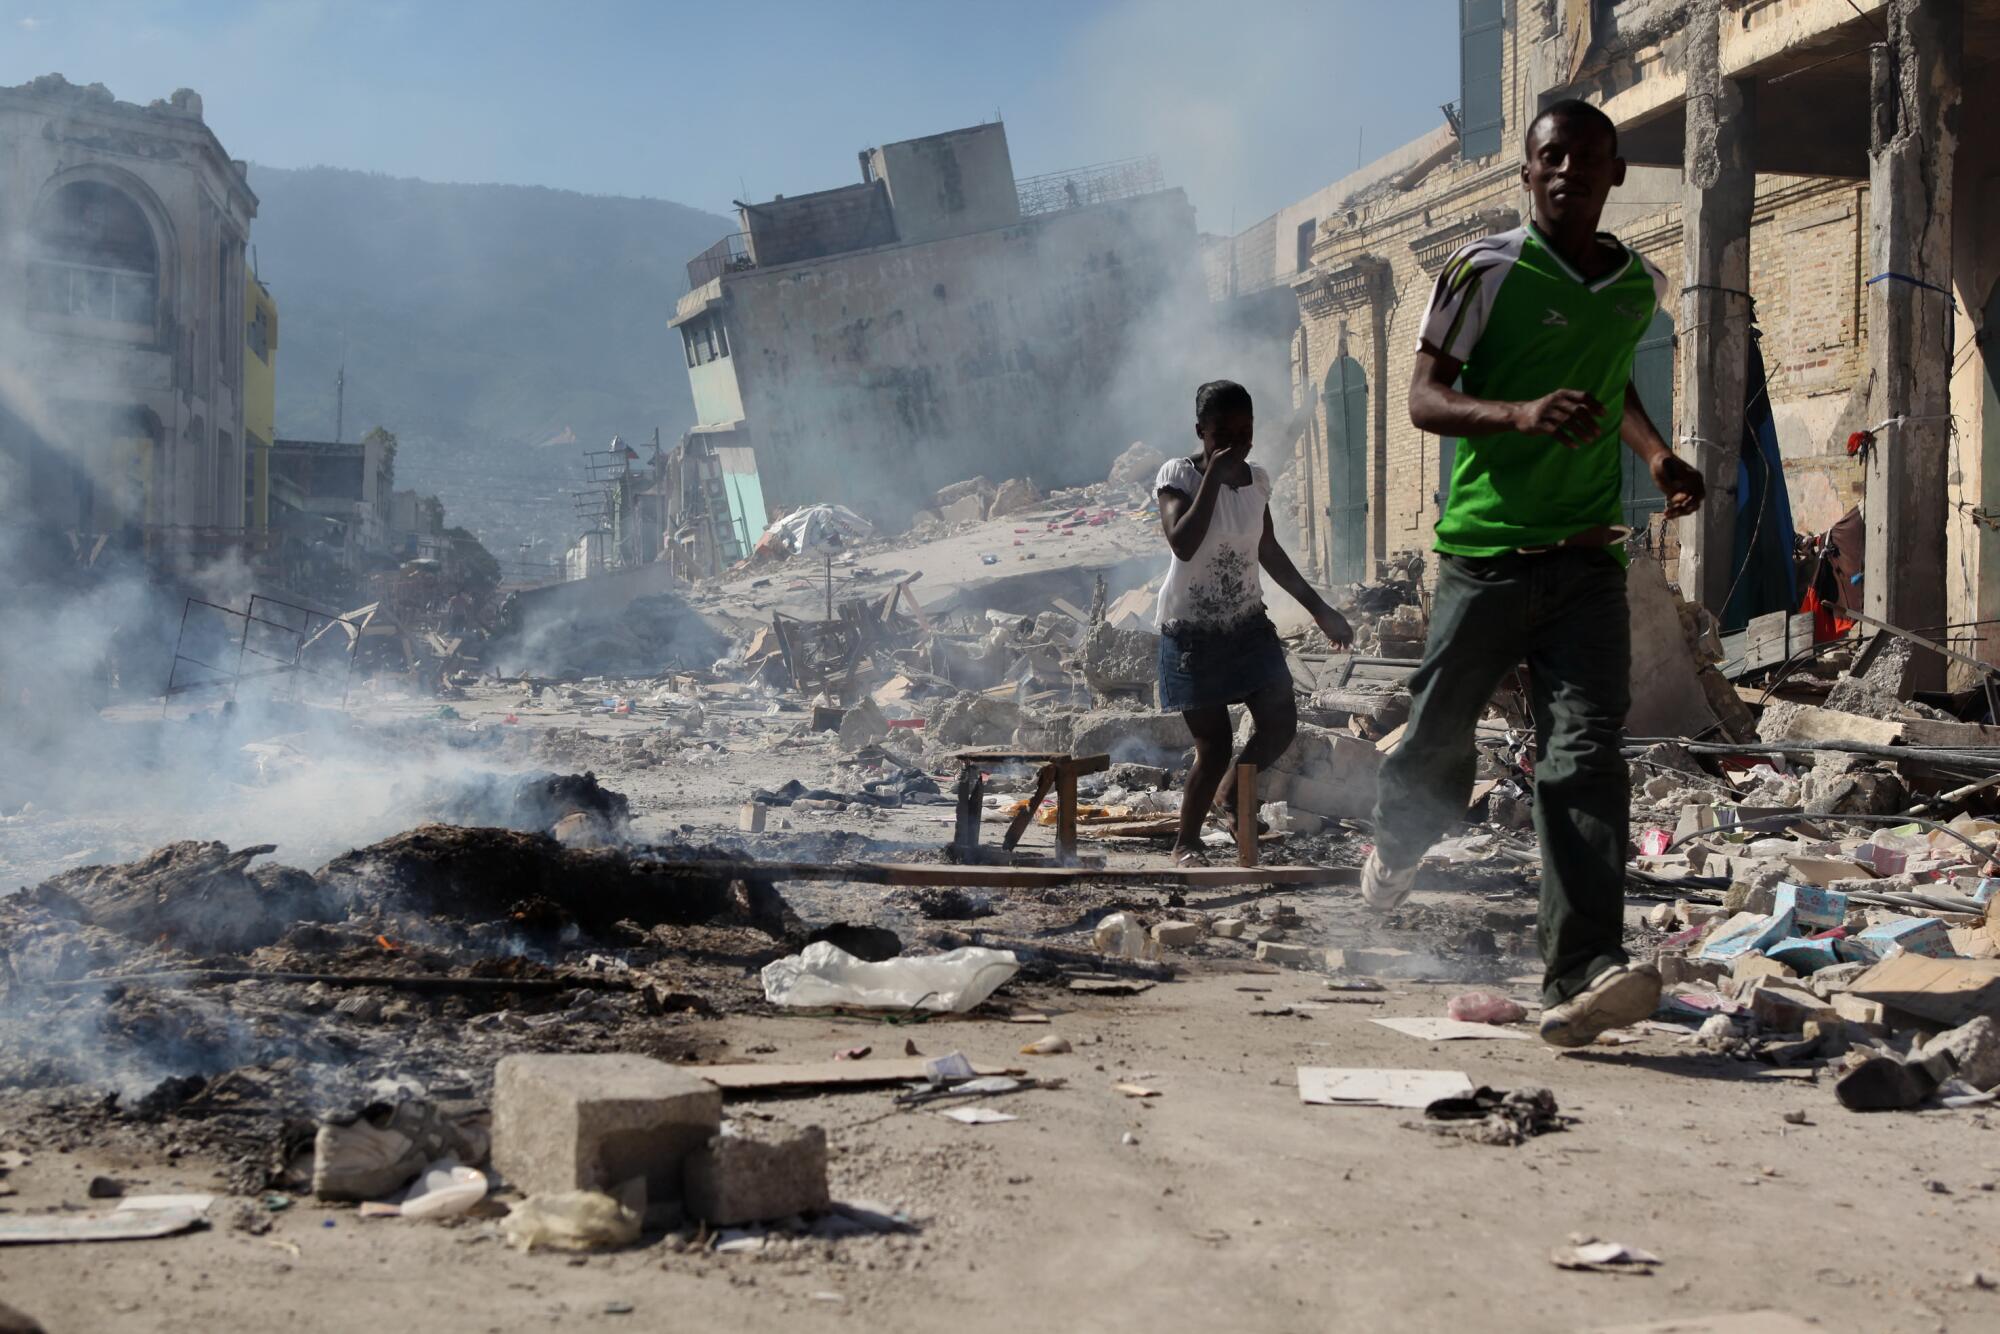 Haiti's 2010 earthquake 